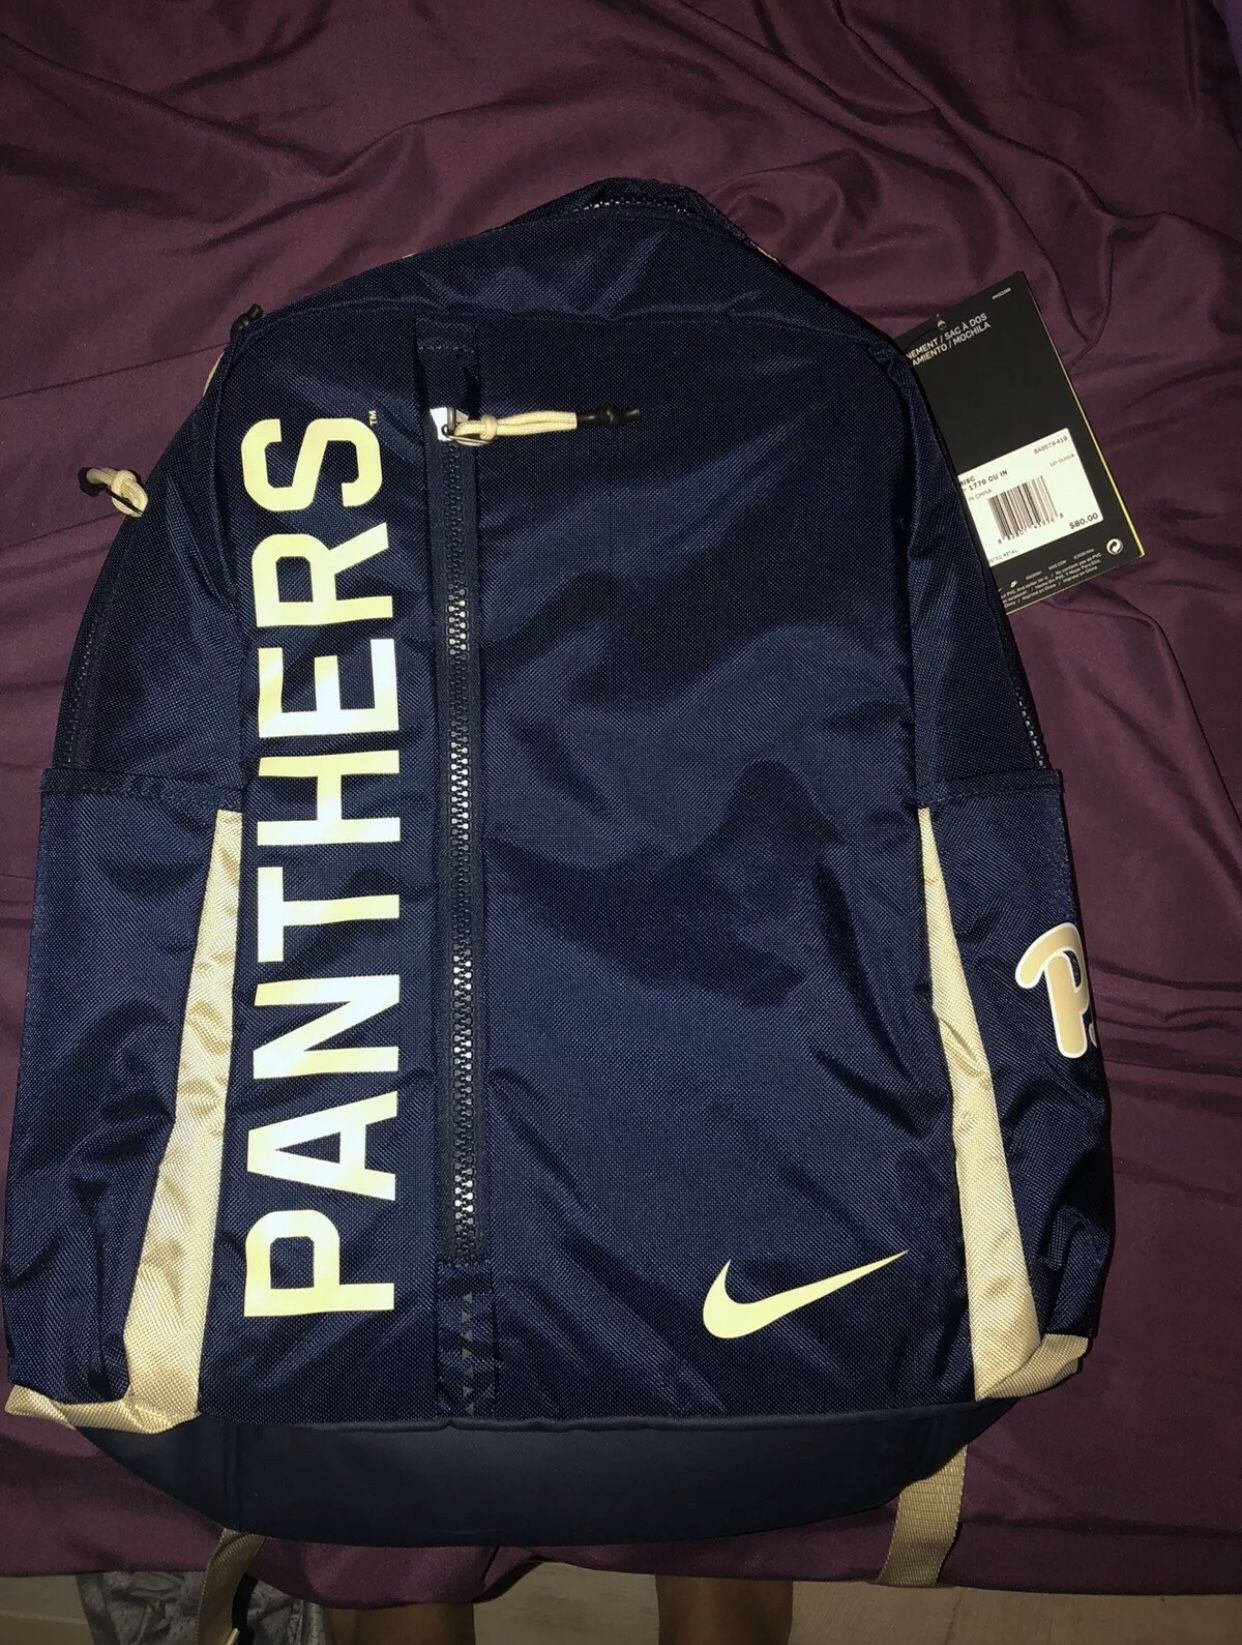 Pitt Panthers Nike Team Name Vapor Power Backpack - Navy